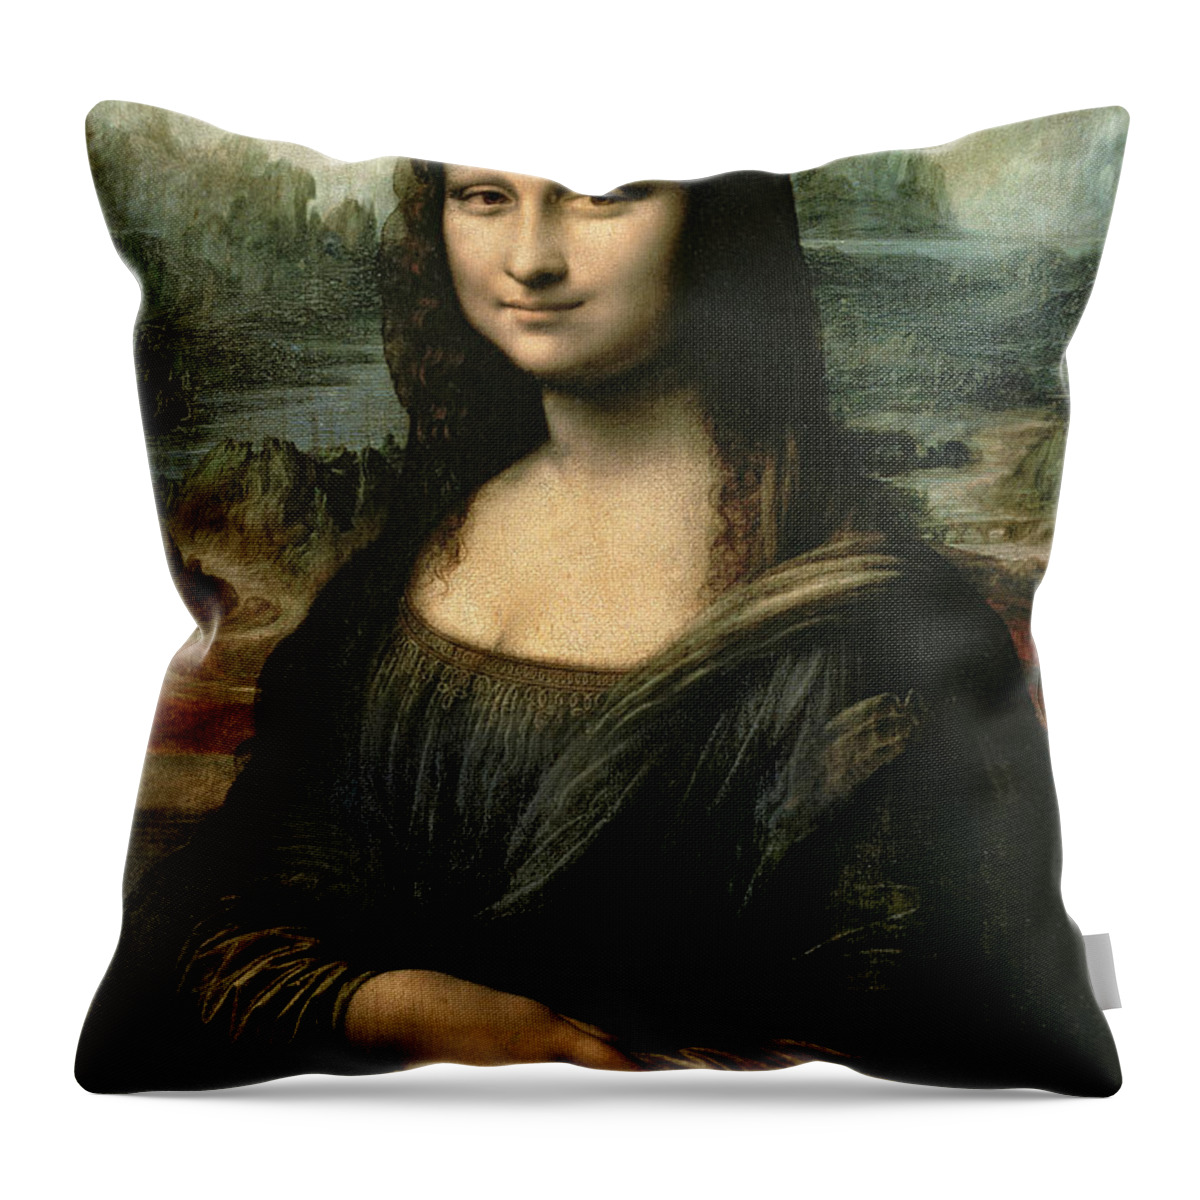 #faatoppicks Throw Pillow featuring the painting Mona Lisa by Leonardo da Vinci